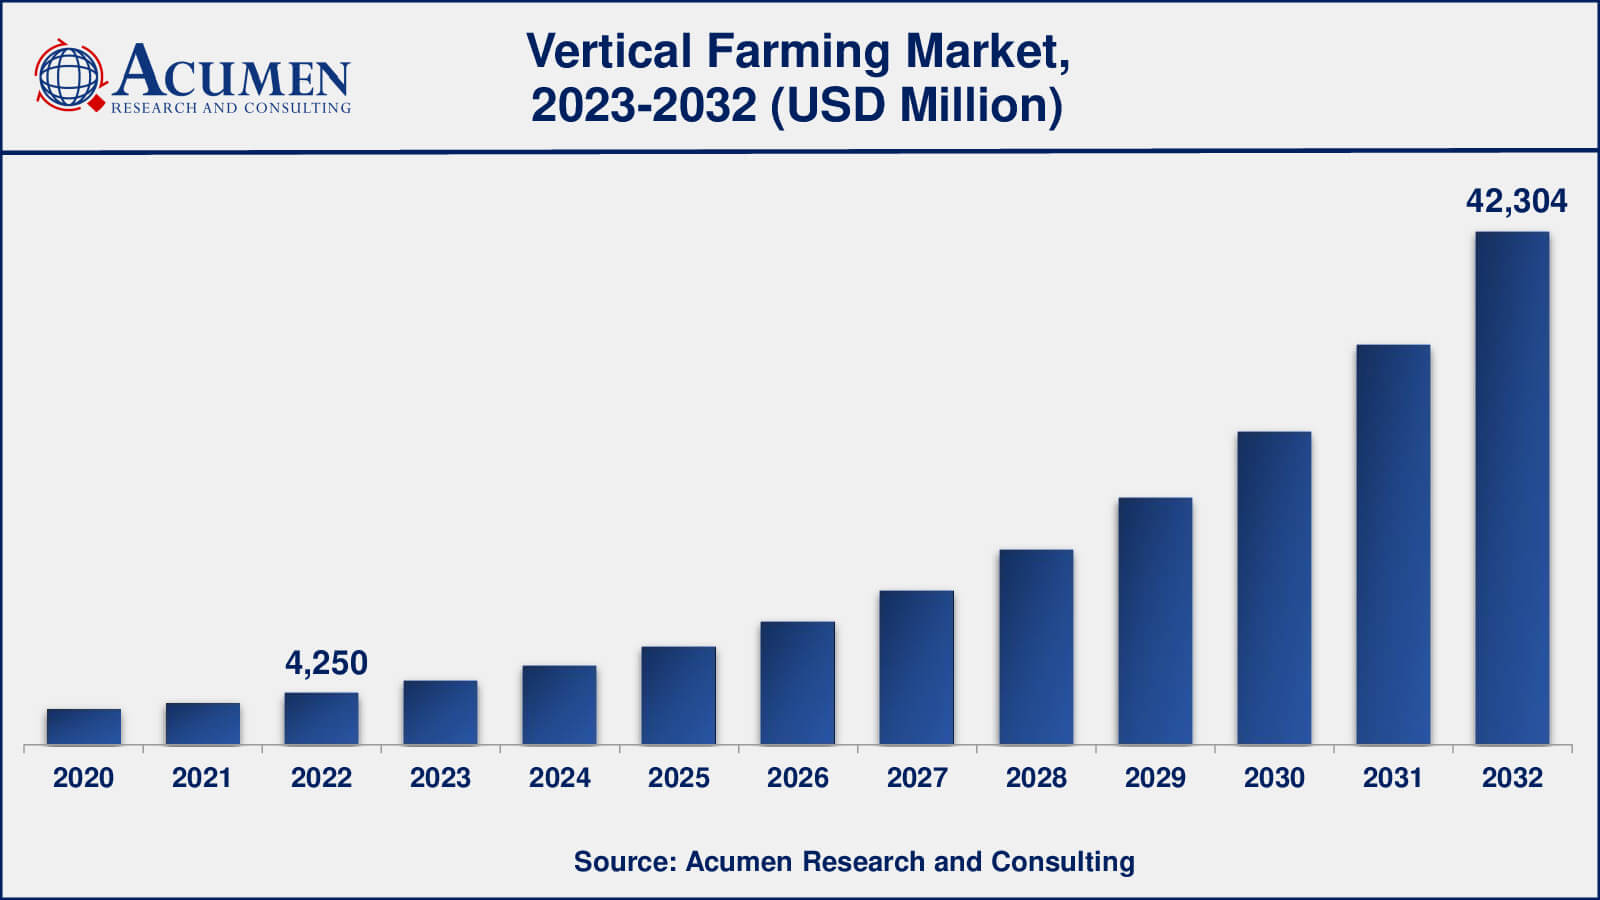 Vertical Farming Market Drivers